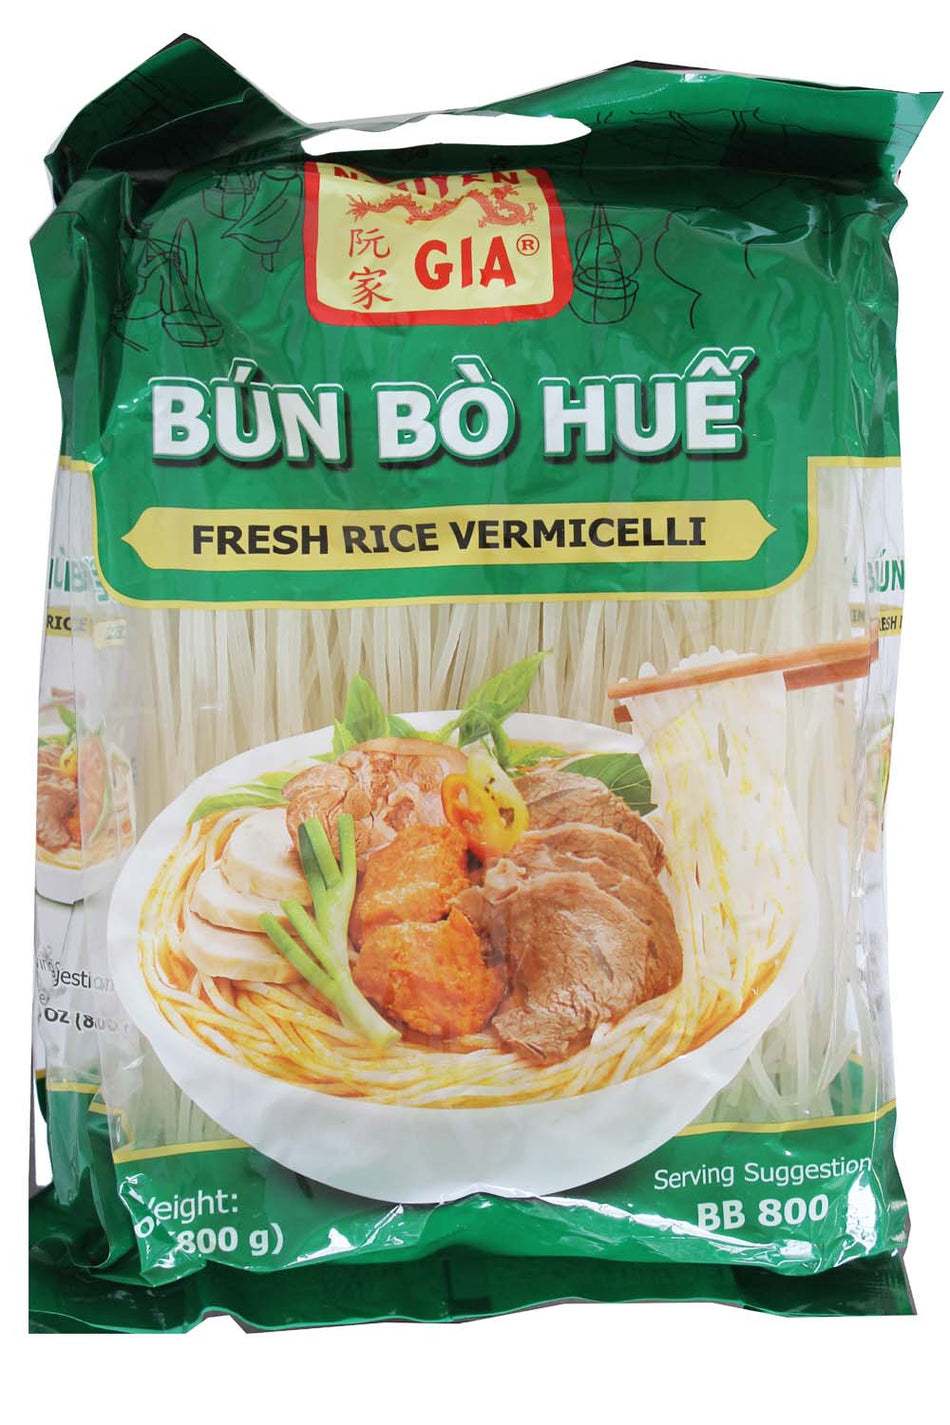 NG Bun Bo Hue Rice Vermicelli